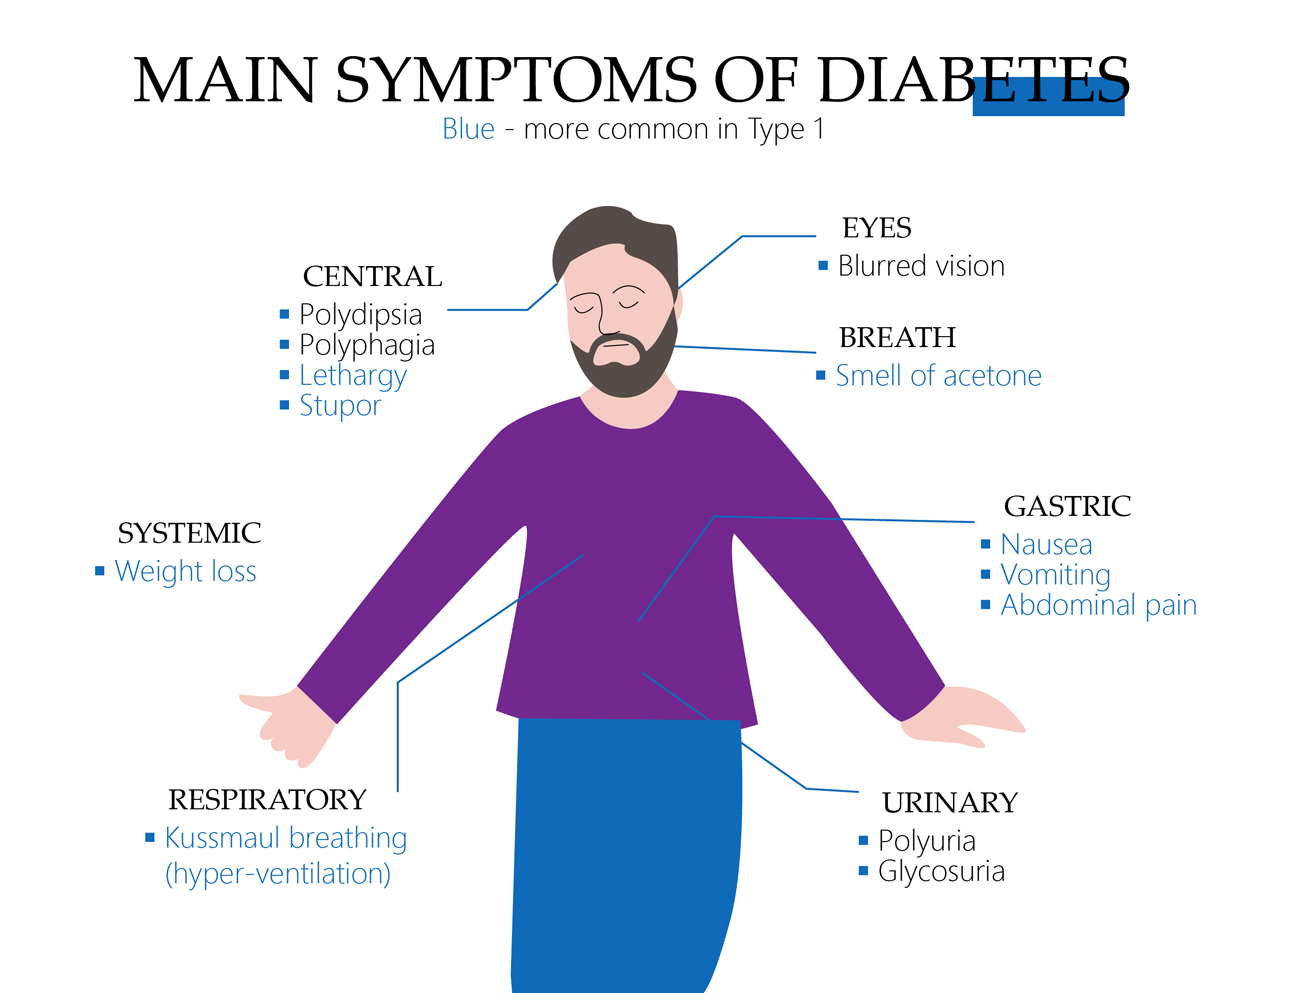 type ii diabetes symptoms